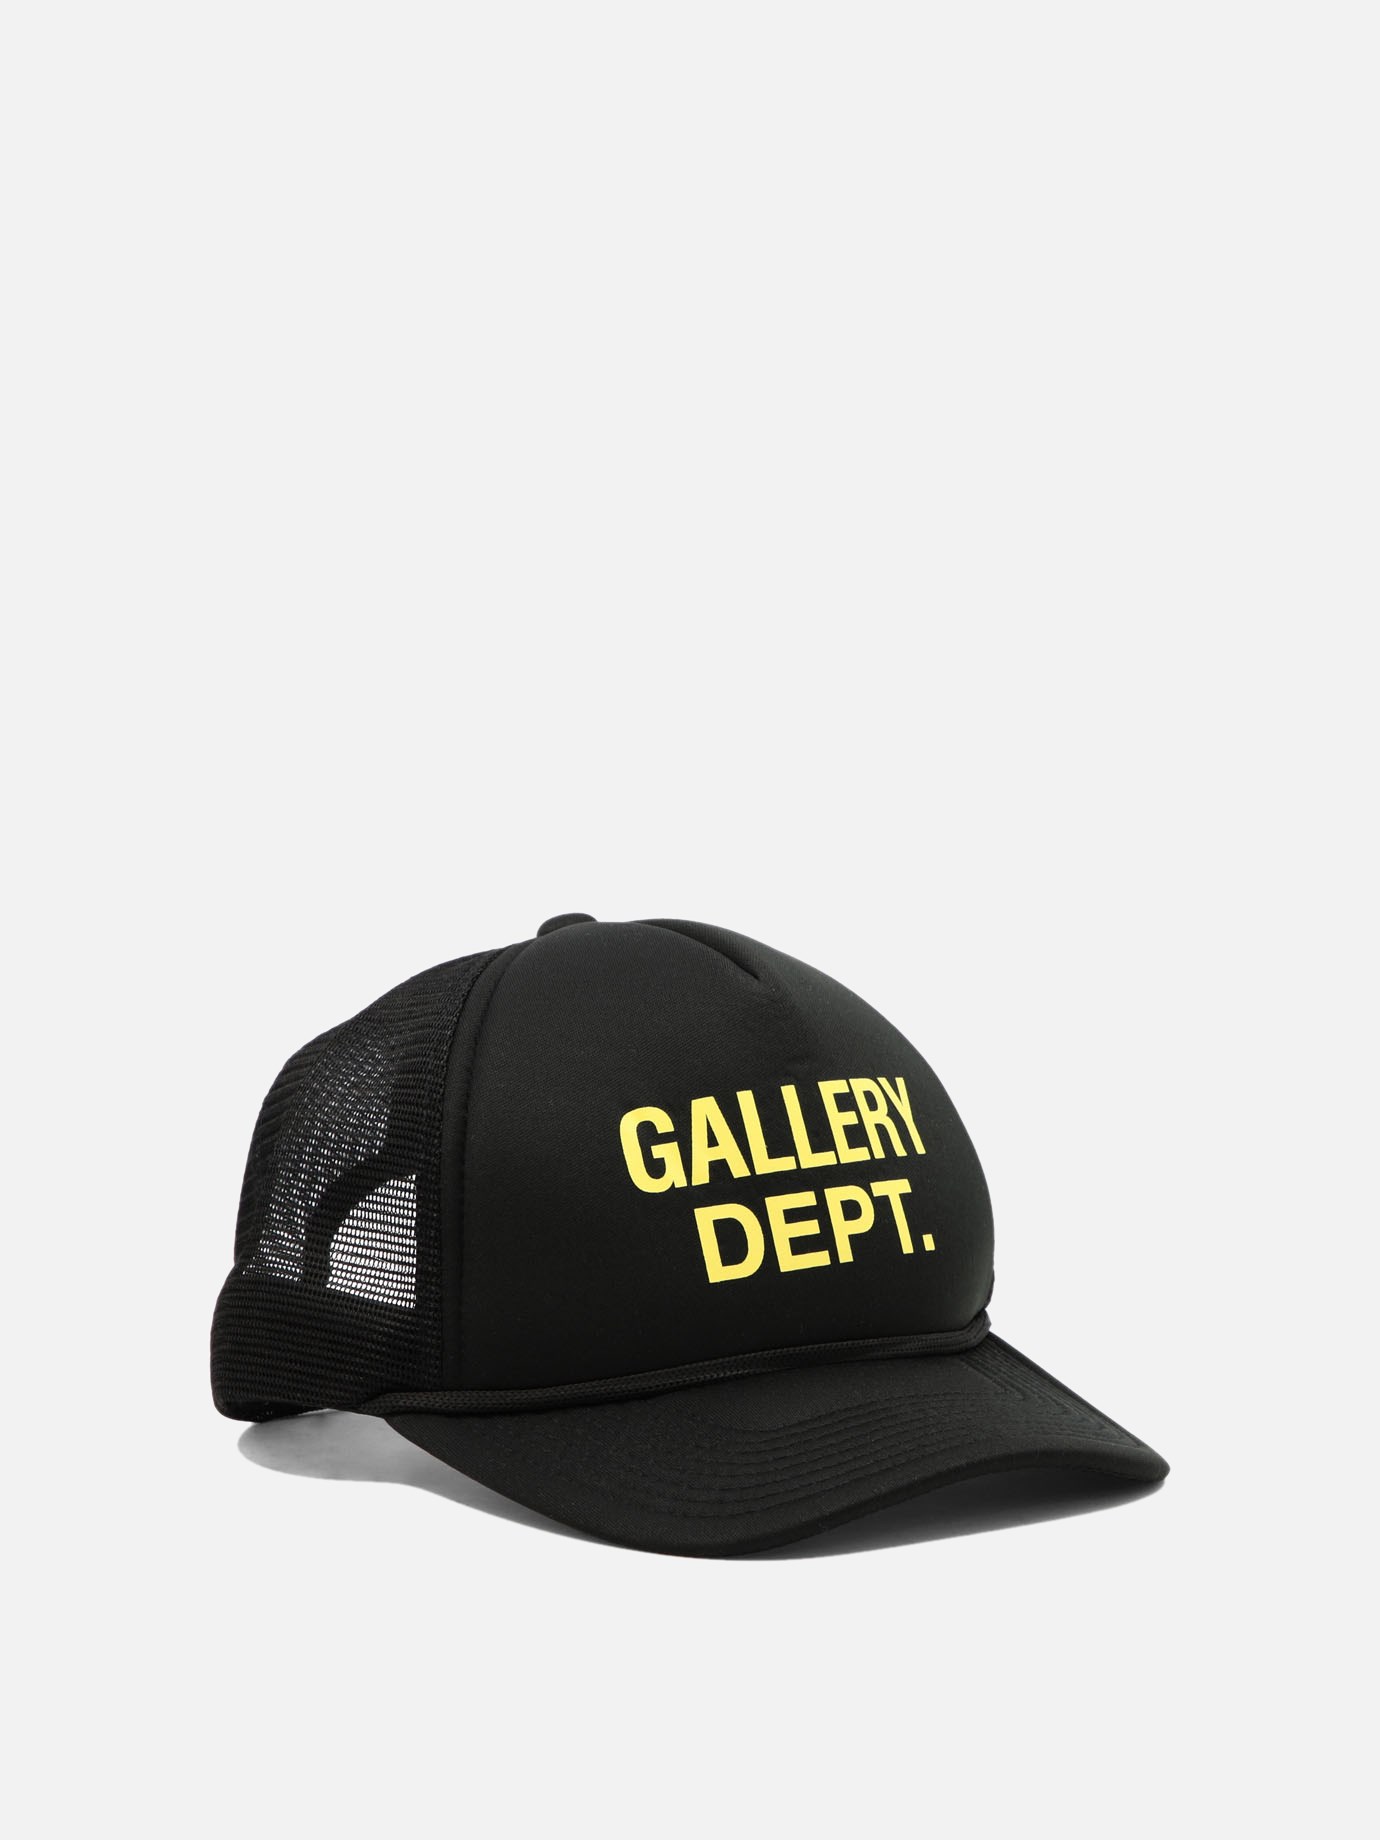  Workshop  cap by Gallery Dept.